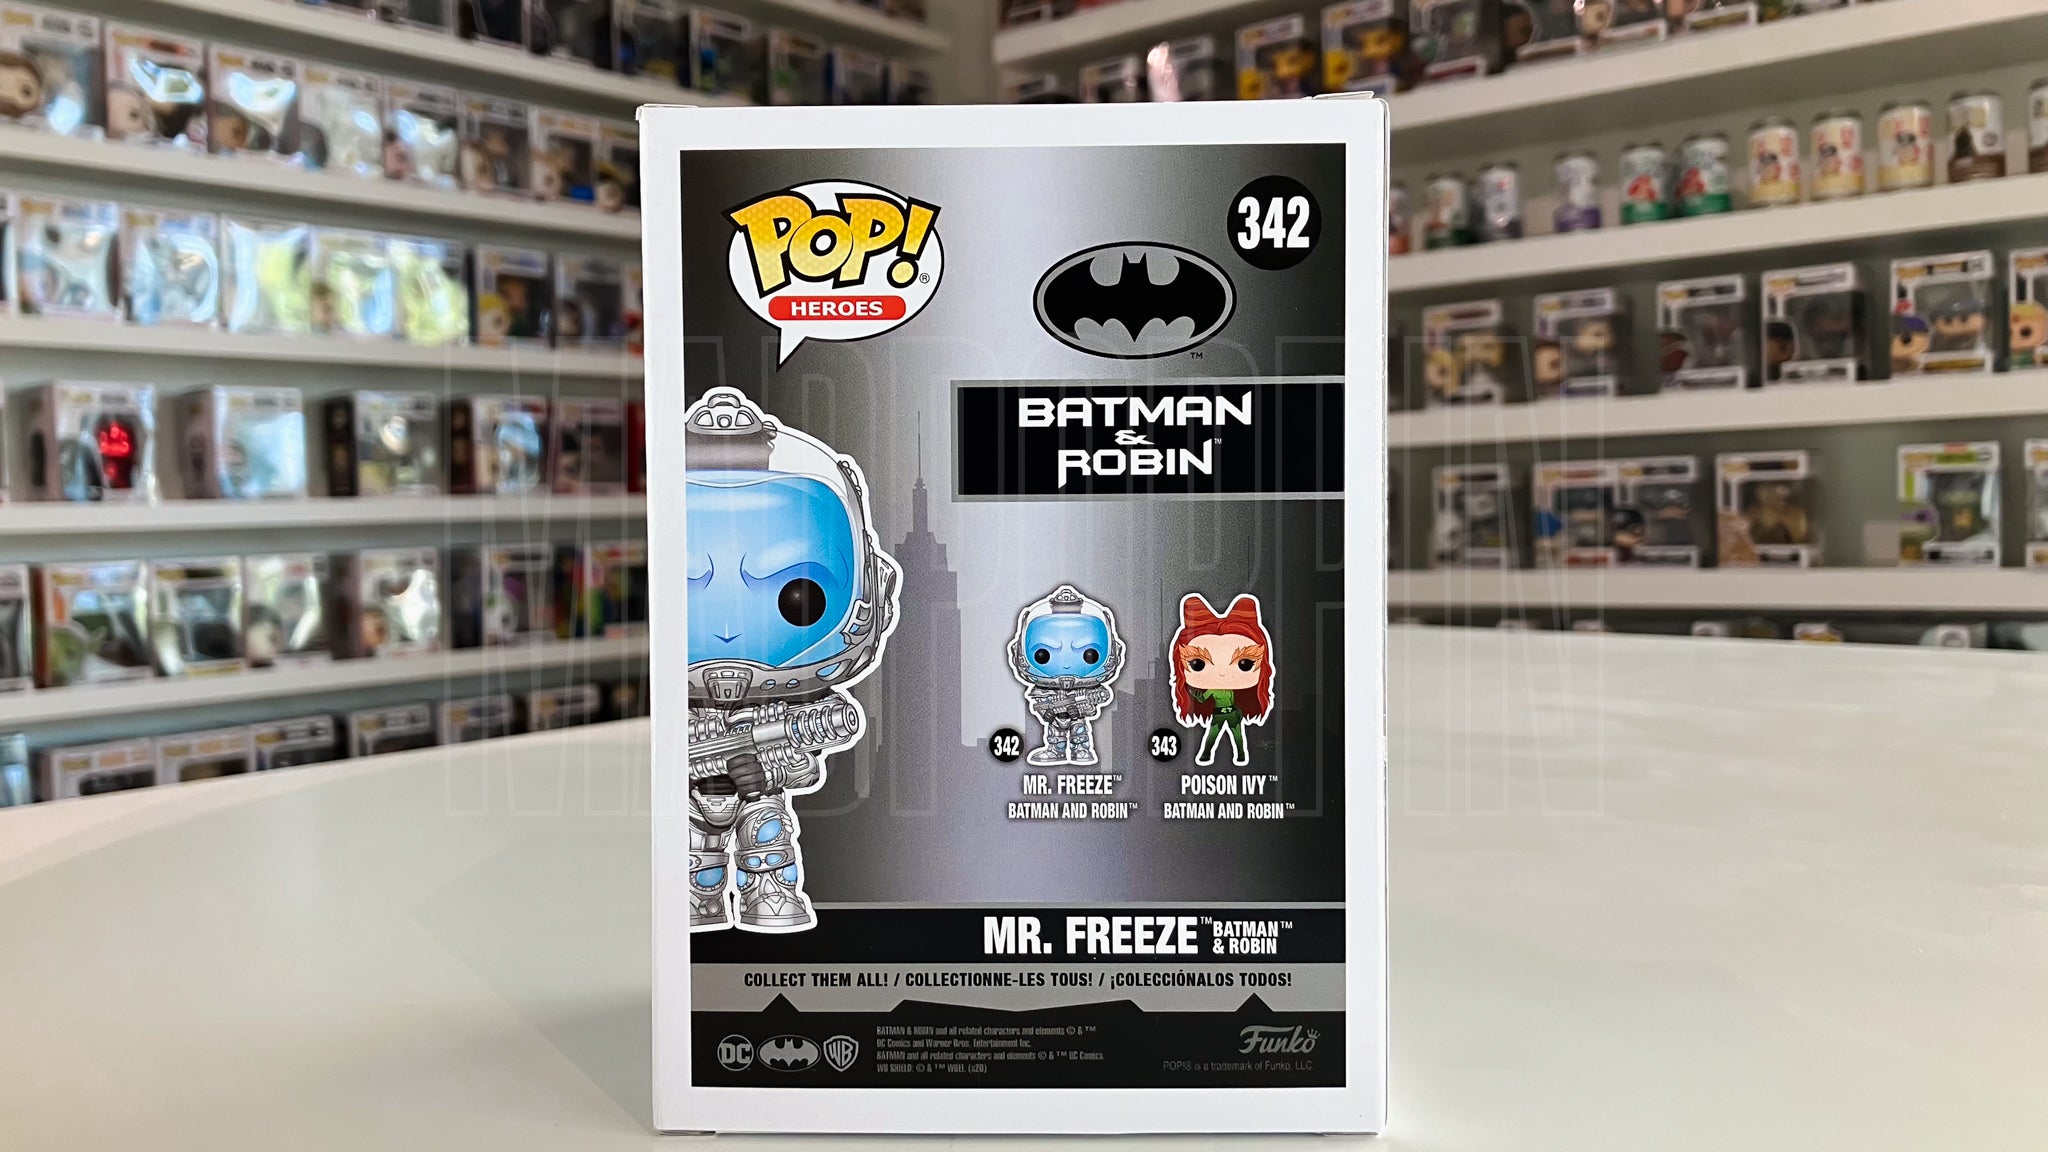 Funko Pop DC Warner Brothers Batman & Robin Mr Freeze San Diego Comic Con 342